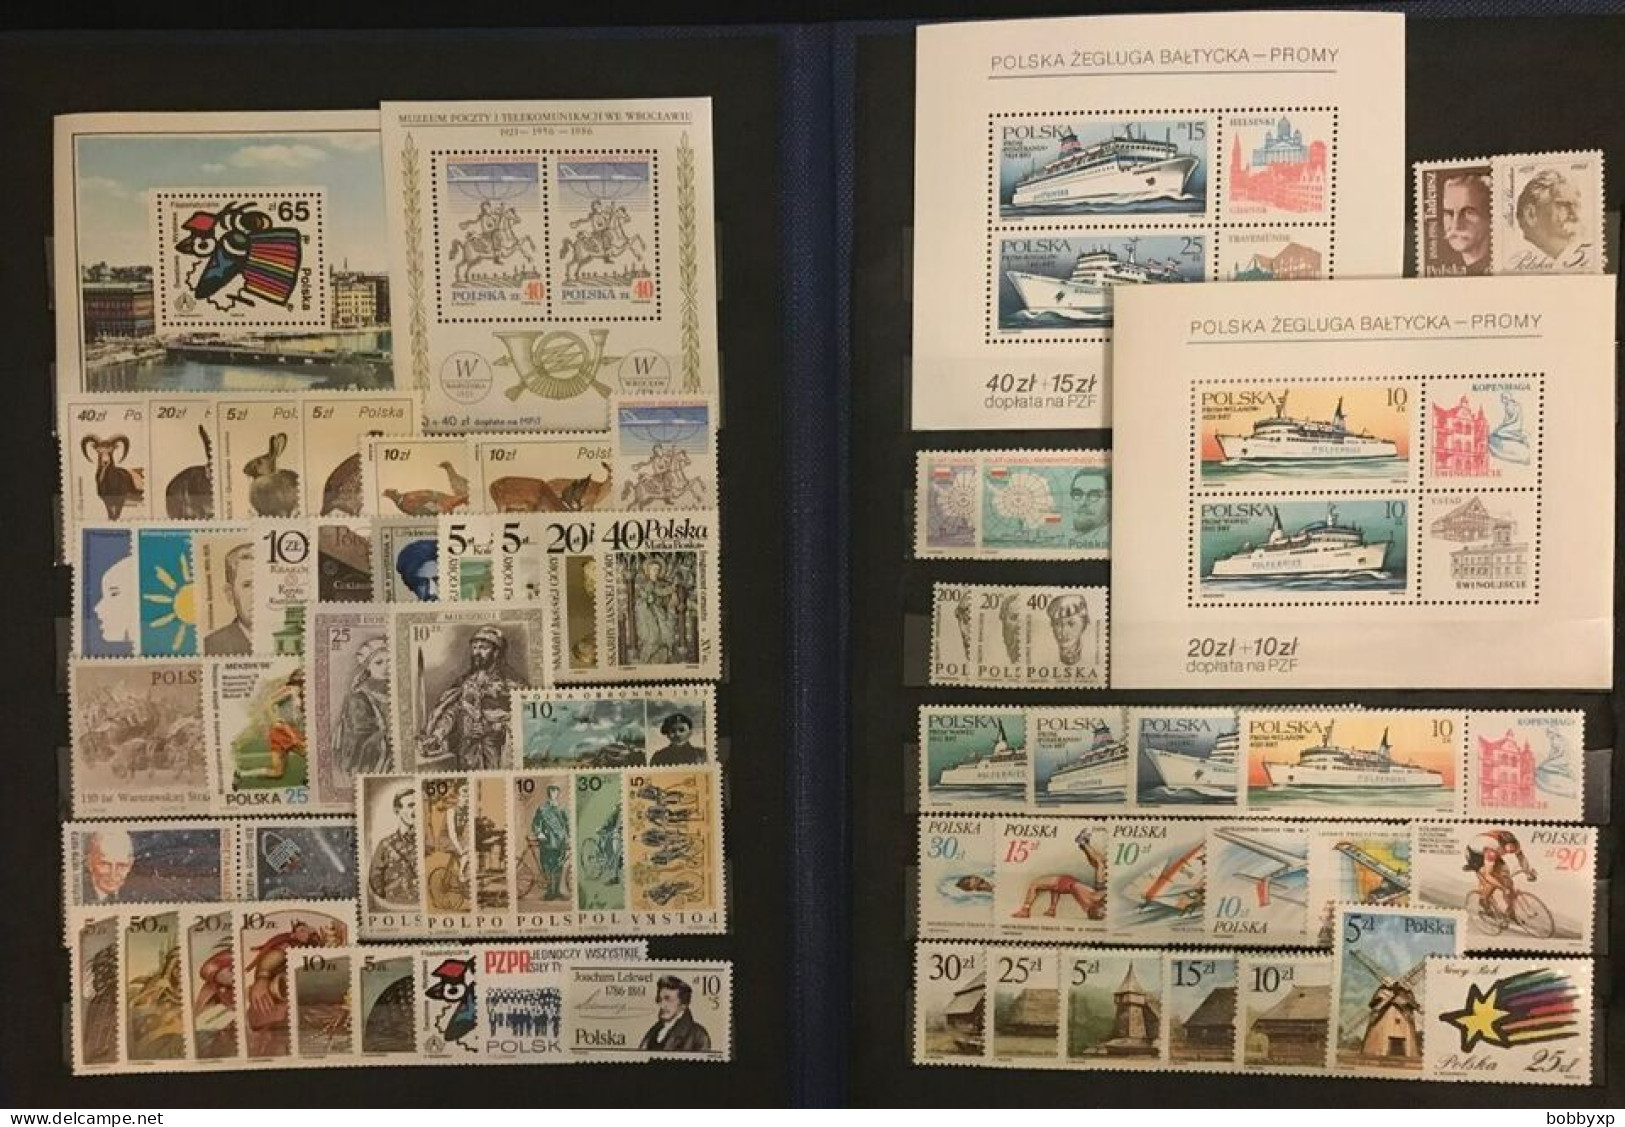 POLAND 1980-1989. 10 Complete Year Sets. Stamps & Souvenir Sheets. MNH